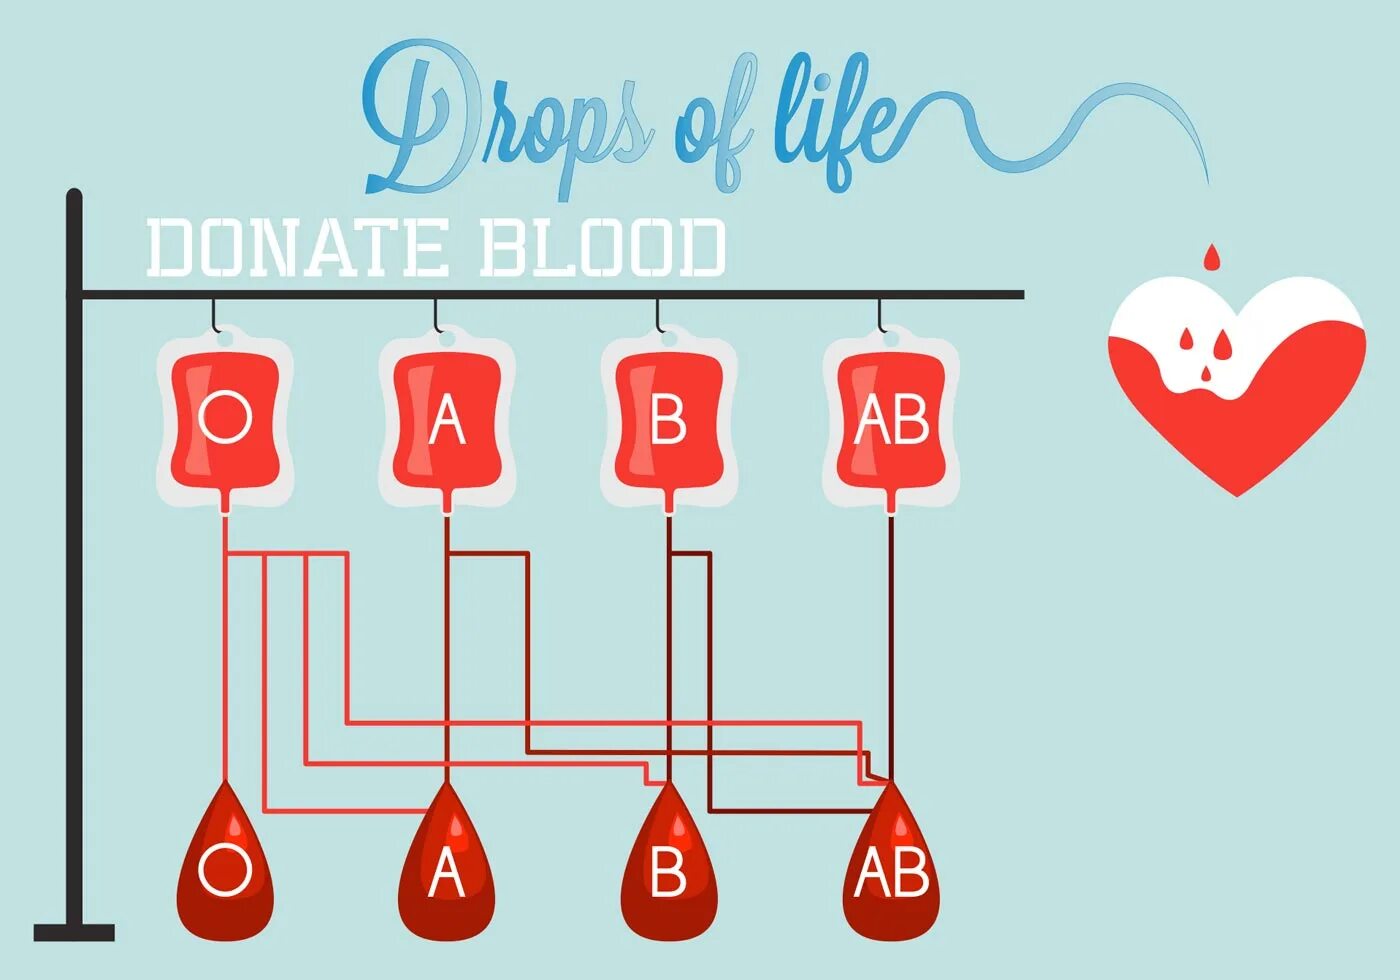 Донорство презентация. Донорство крови. Группы крови донорство. Плакат донорская кровь. Донорство крови презентация.